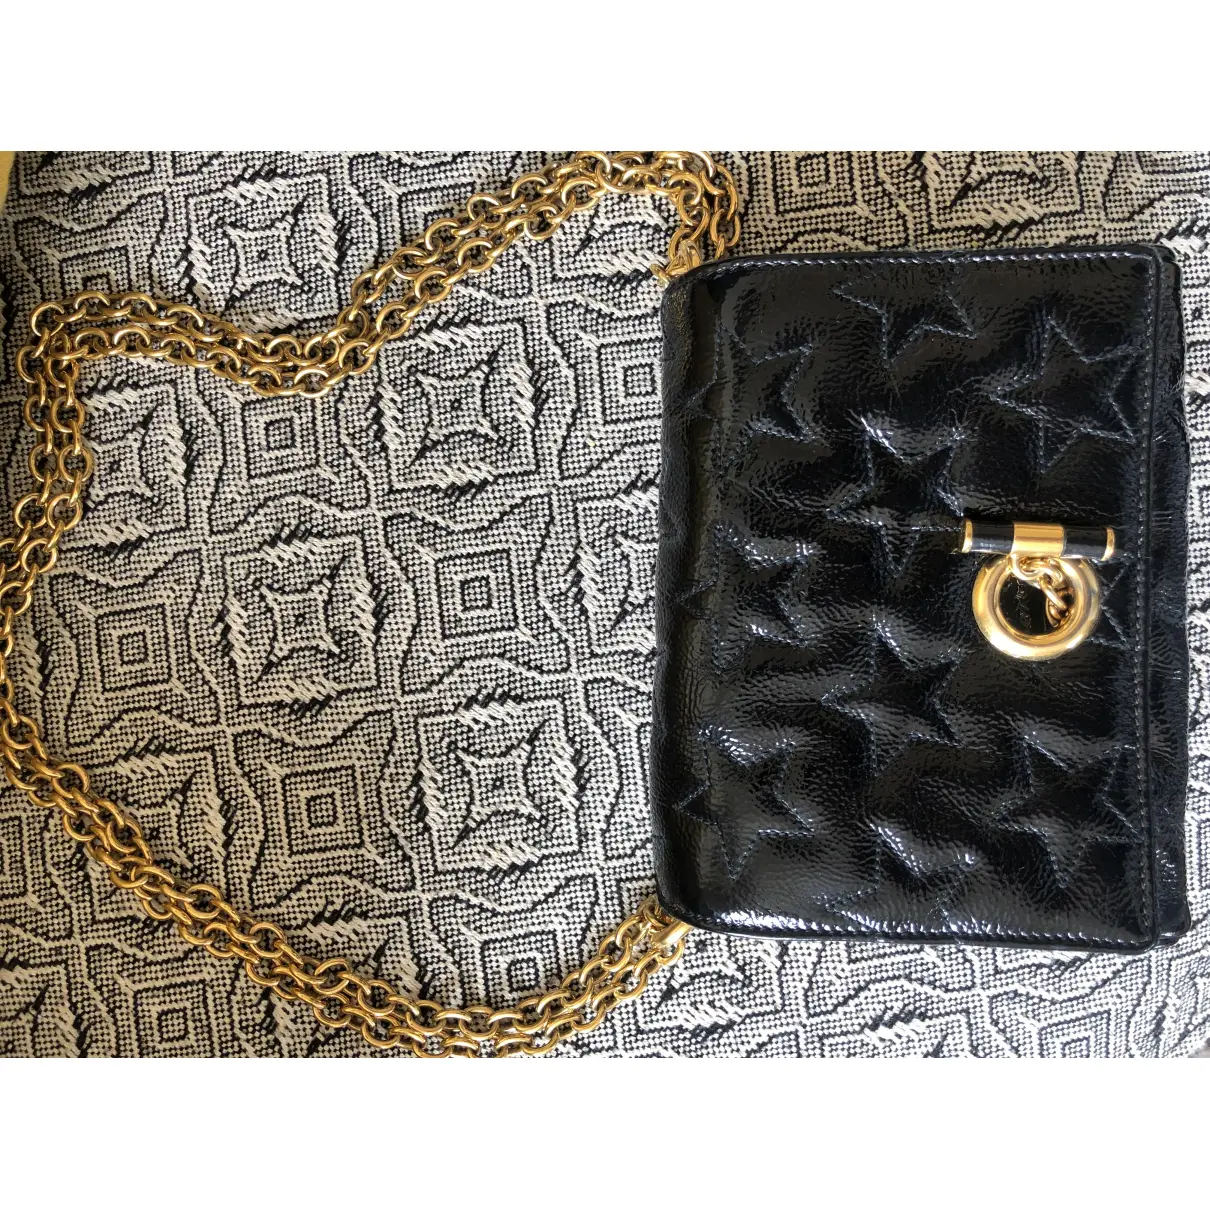 Patent leather crossbody bag Yves Saint Laurent - Vintage